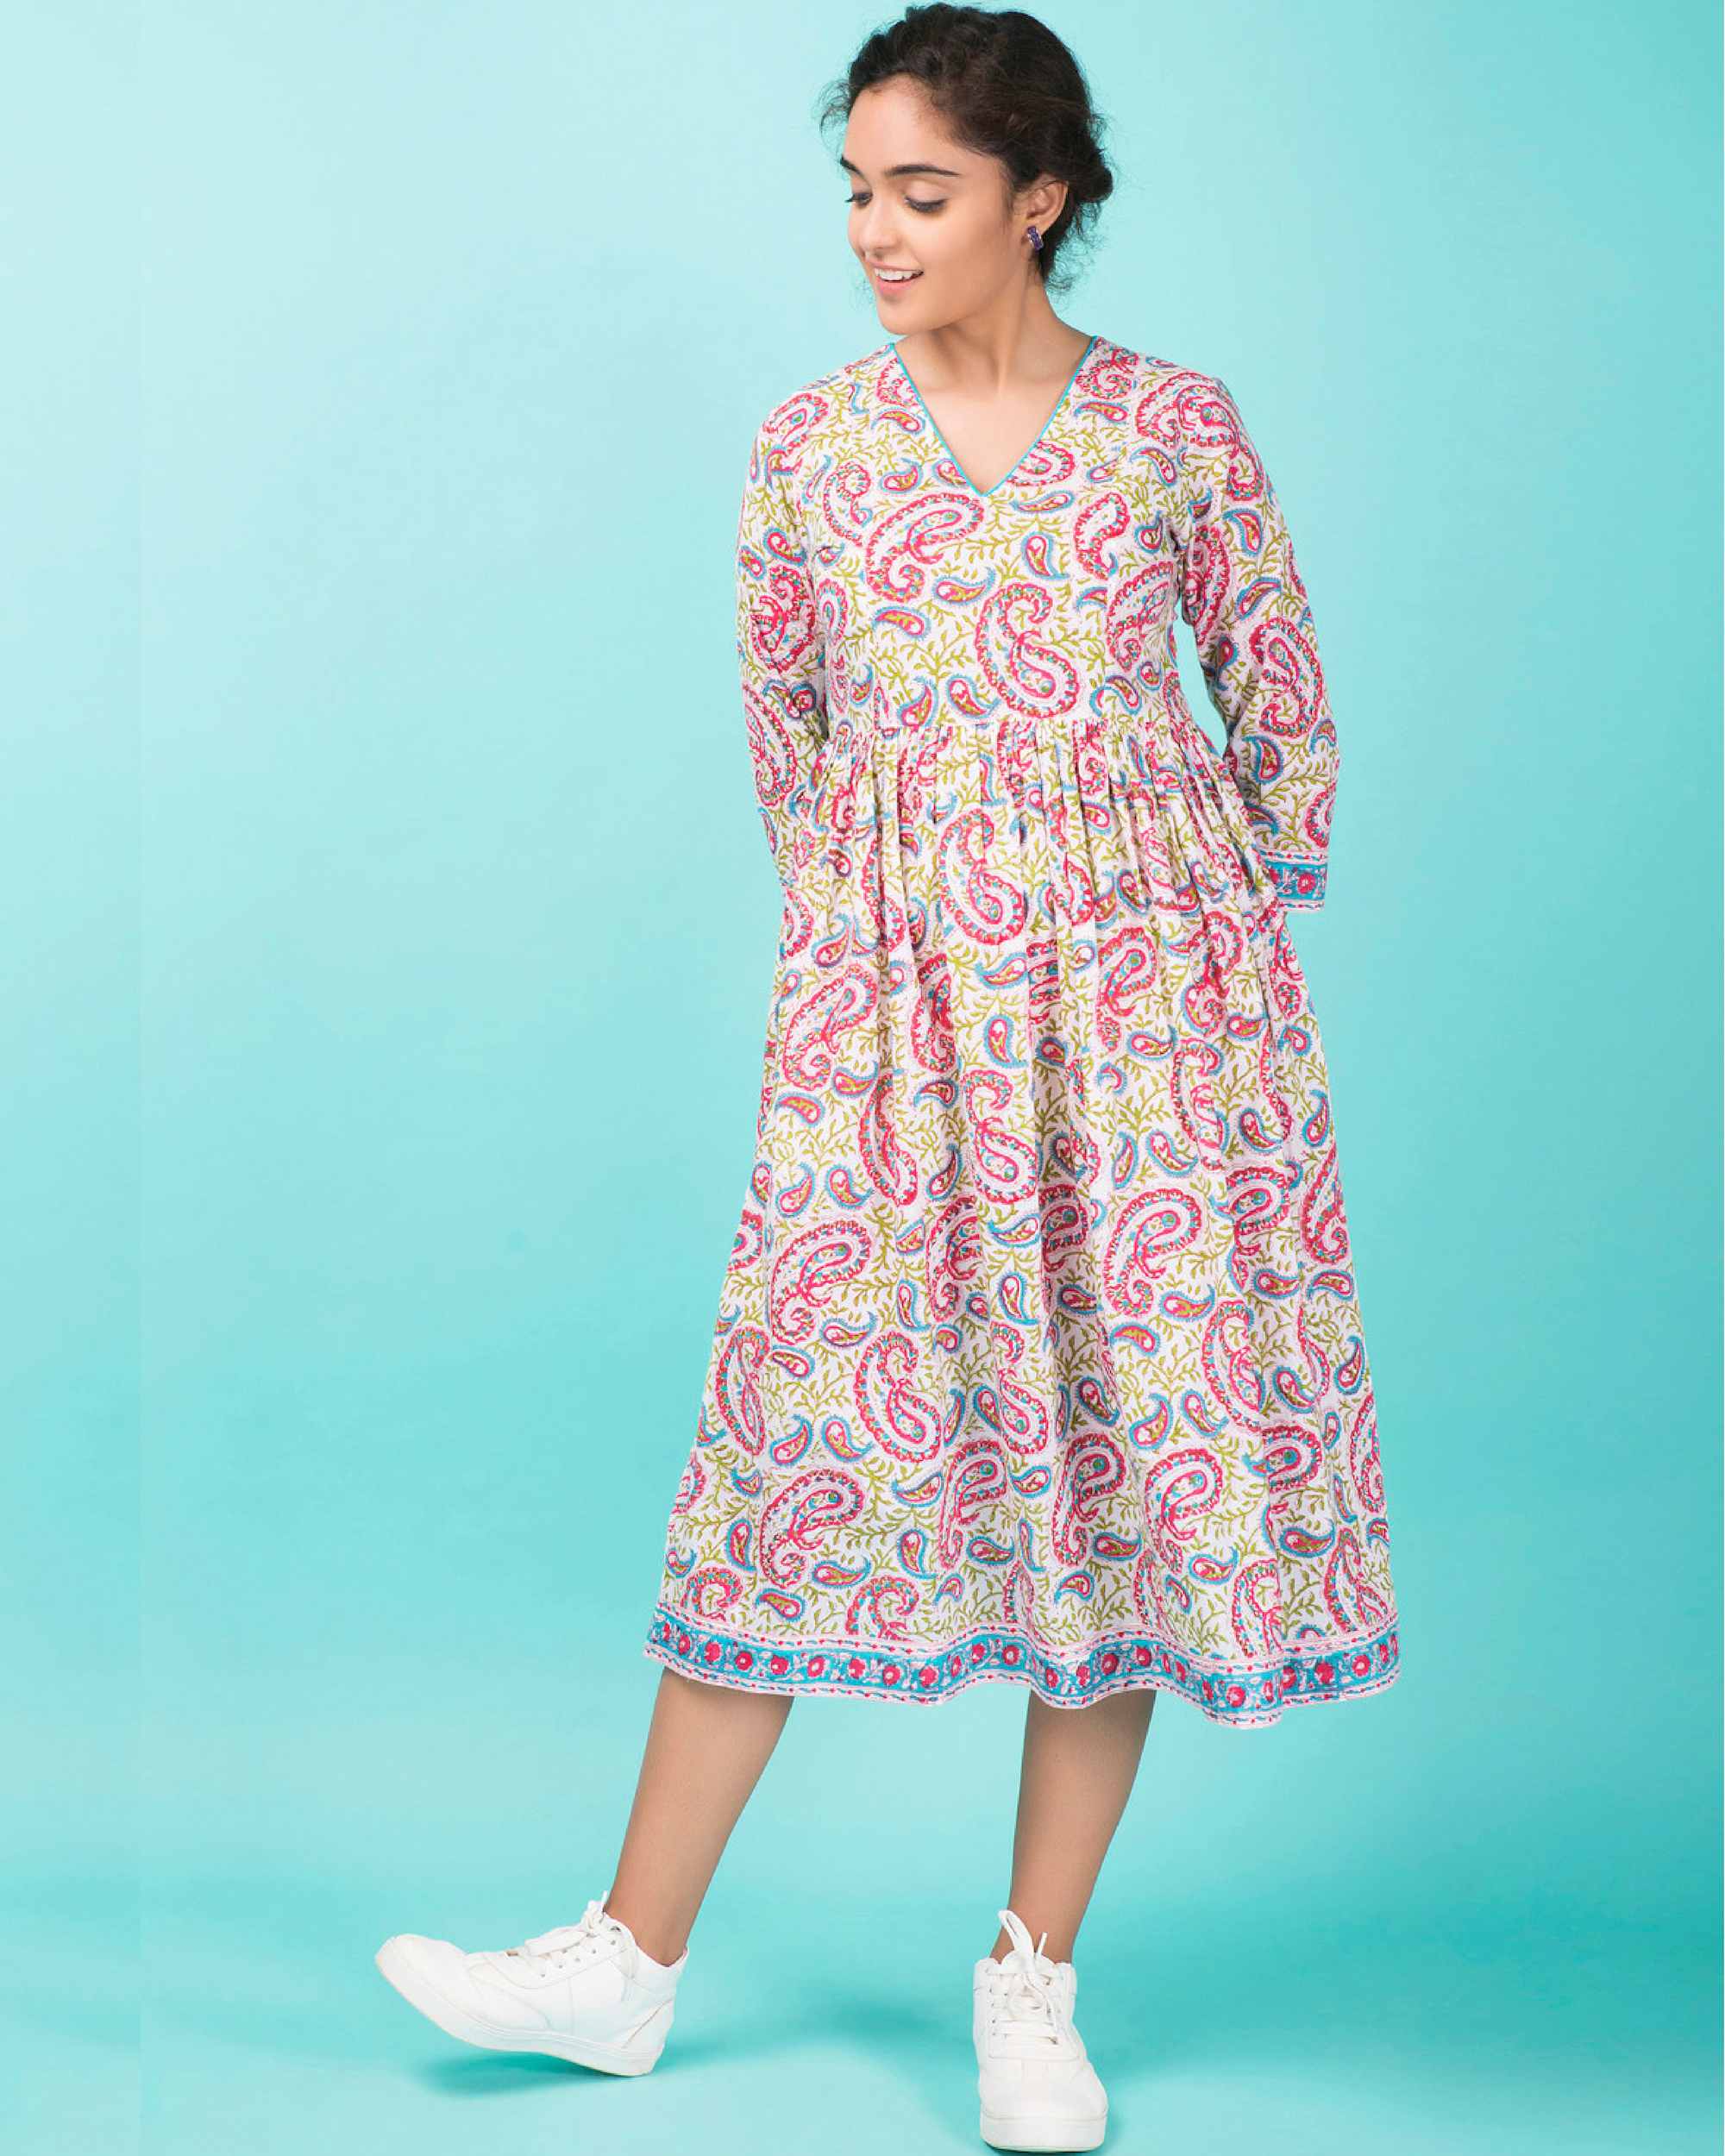 Cotton pink paisley dress by Twirl Studio | The Secret Label